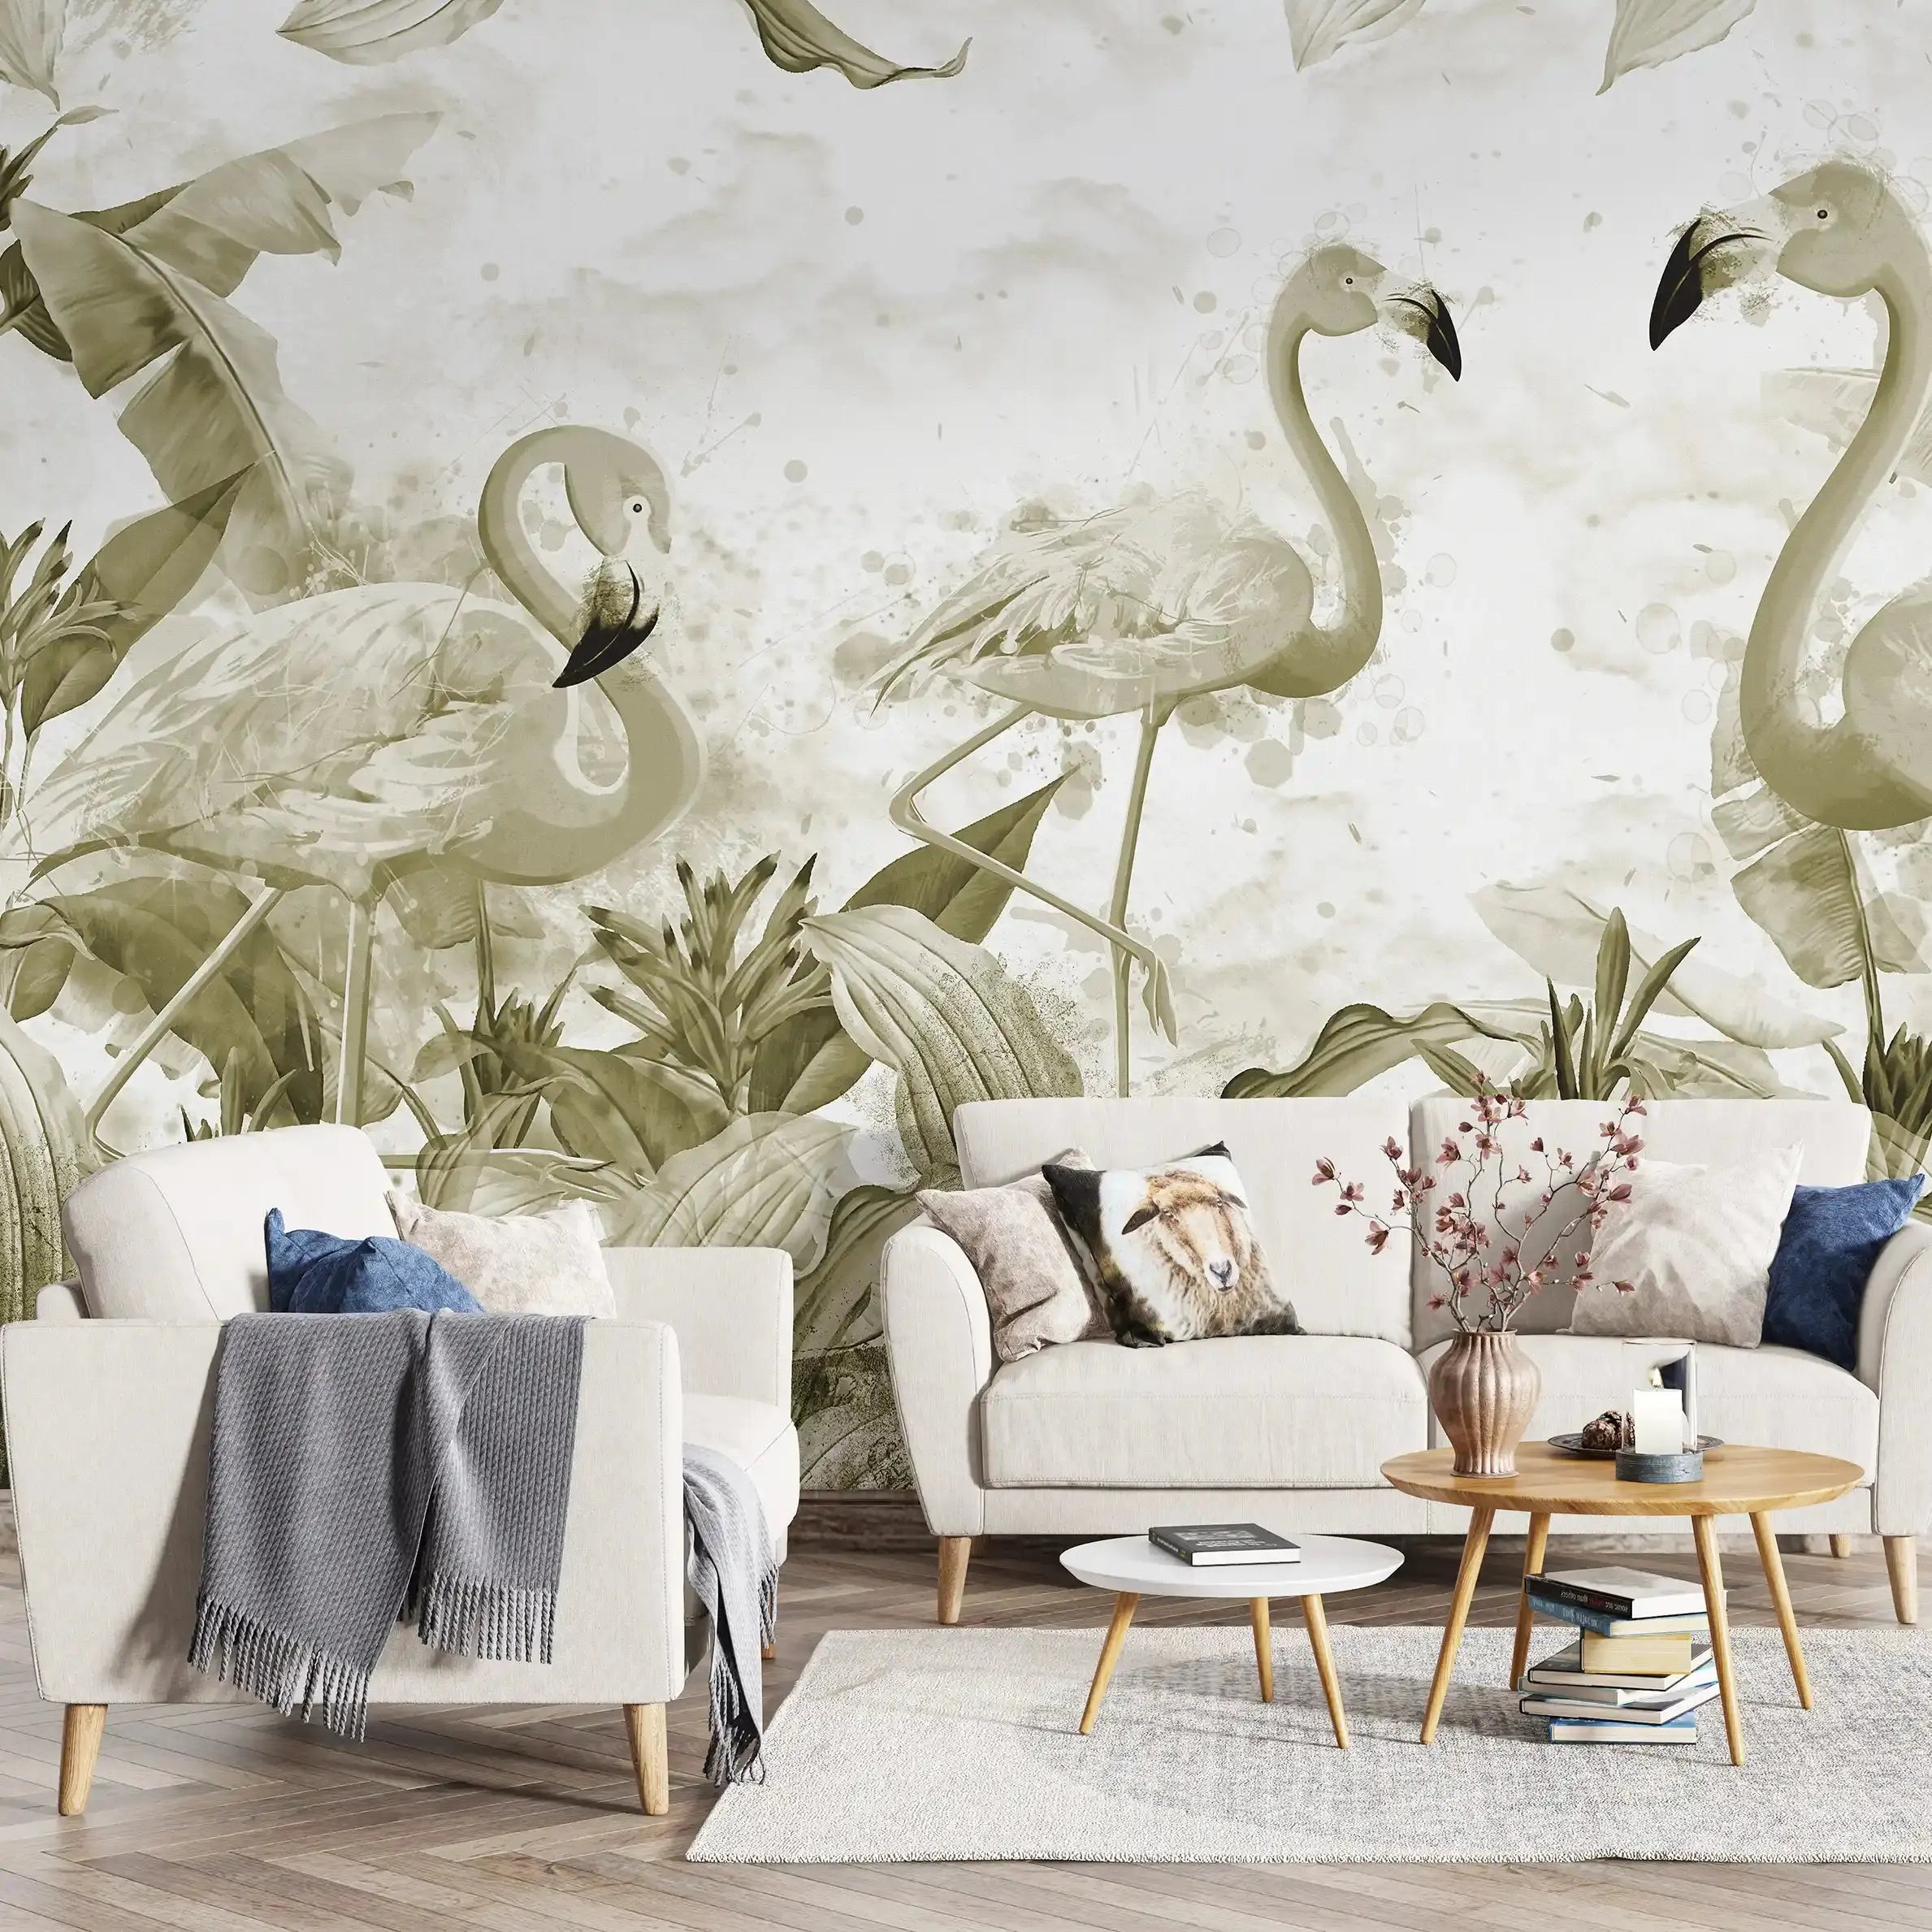 3069-F / Tropical Peel & Stick Wallpaper – Vibrant Green Flamingo and Leaf Design for DIY Home Decor - Artevella